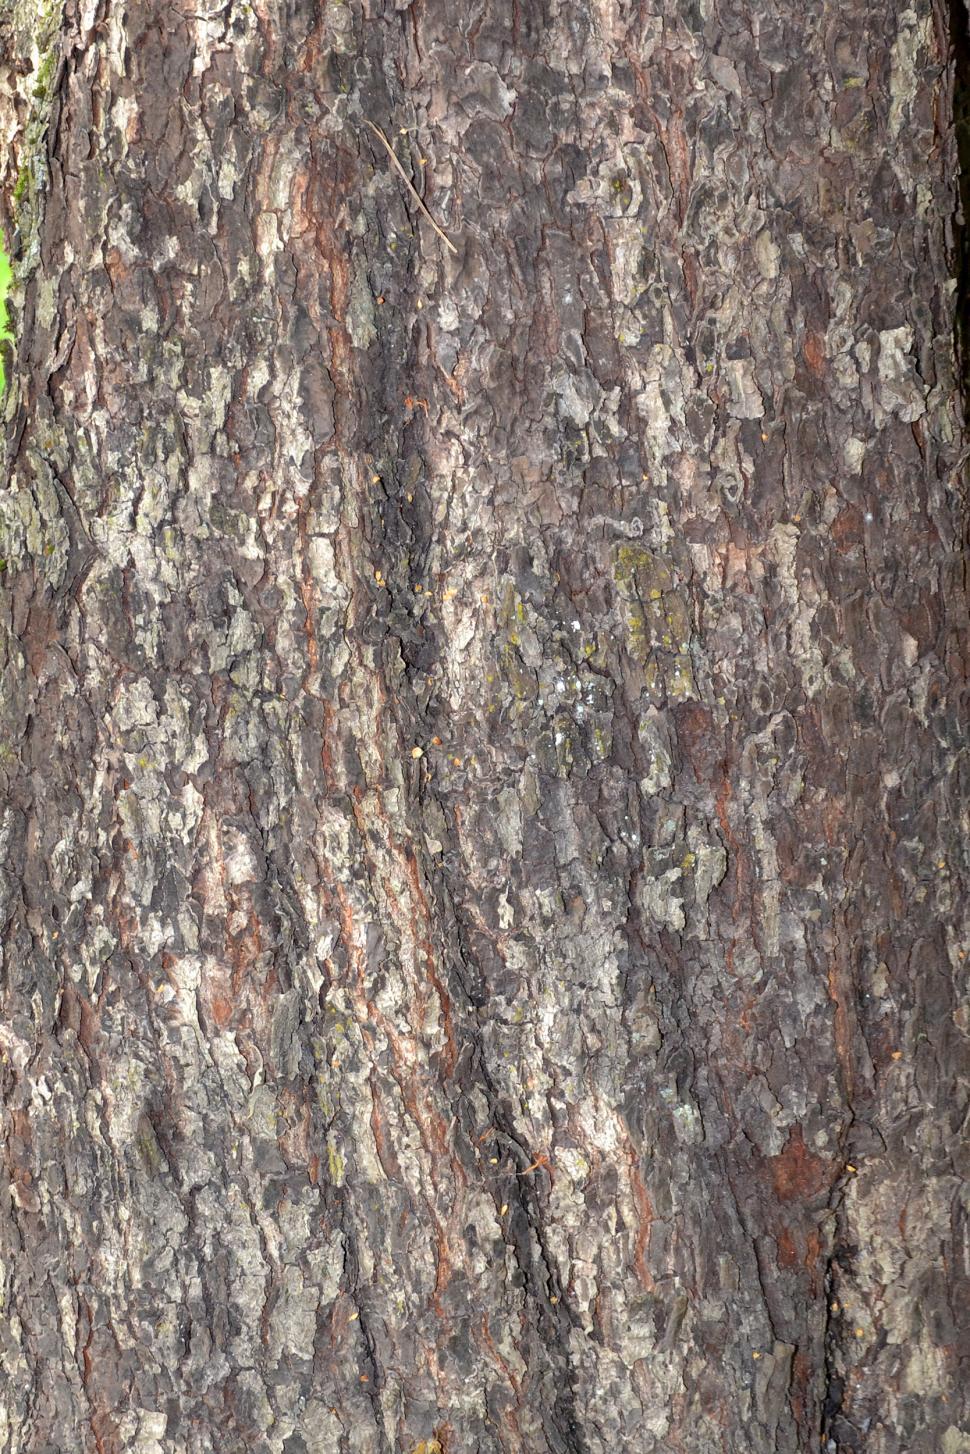 Free Image of Bark of wild service tree 